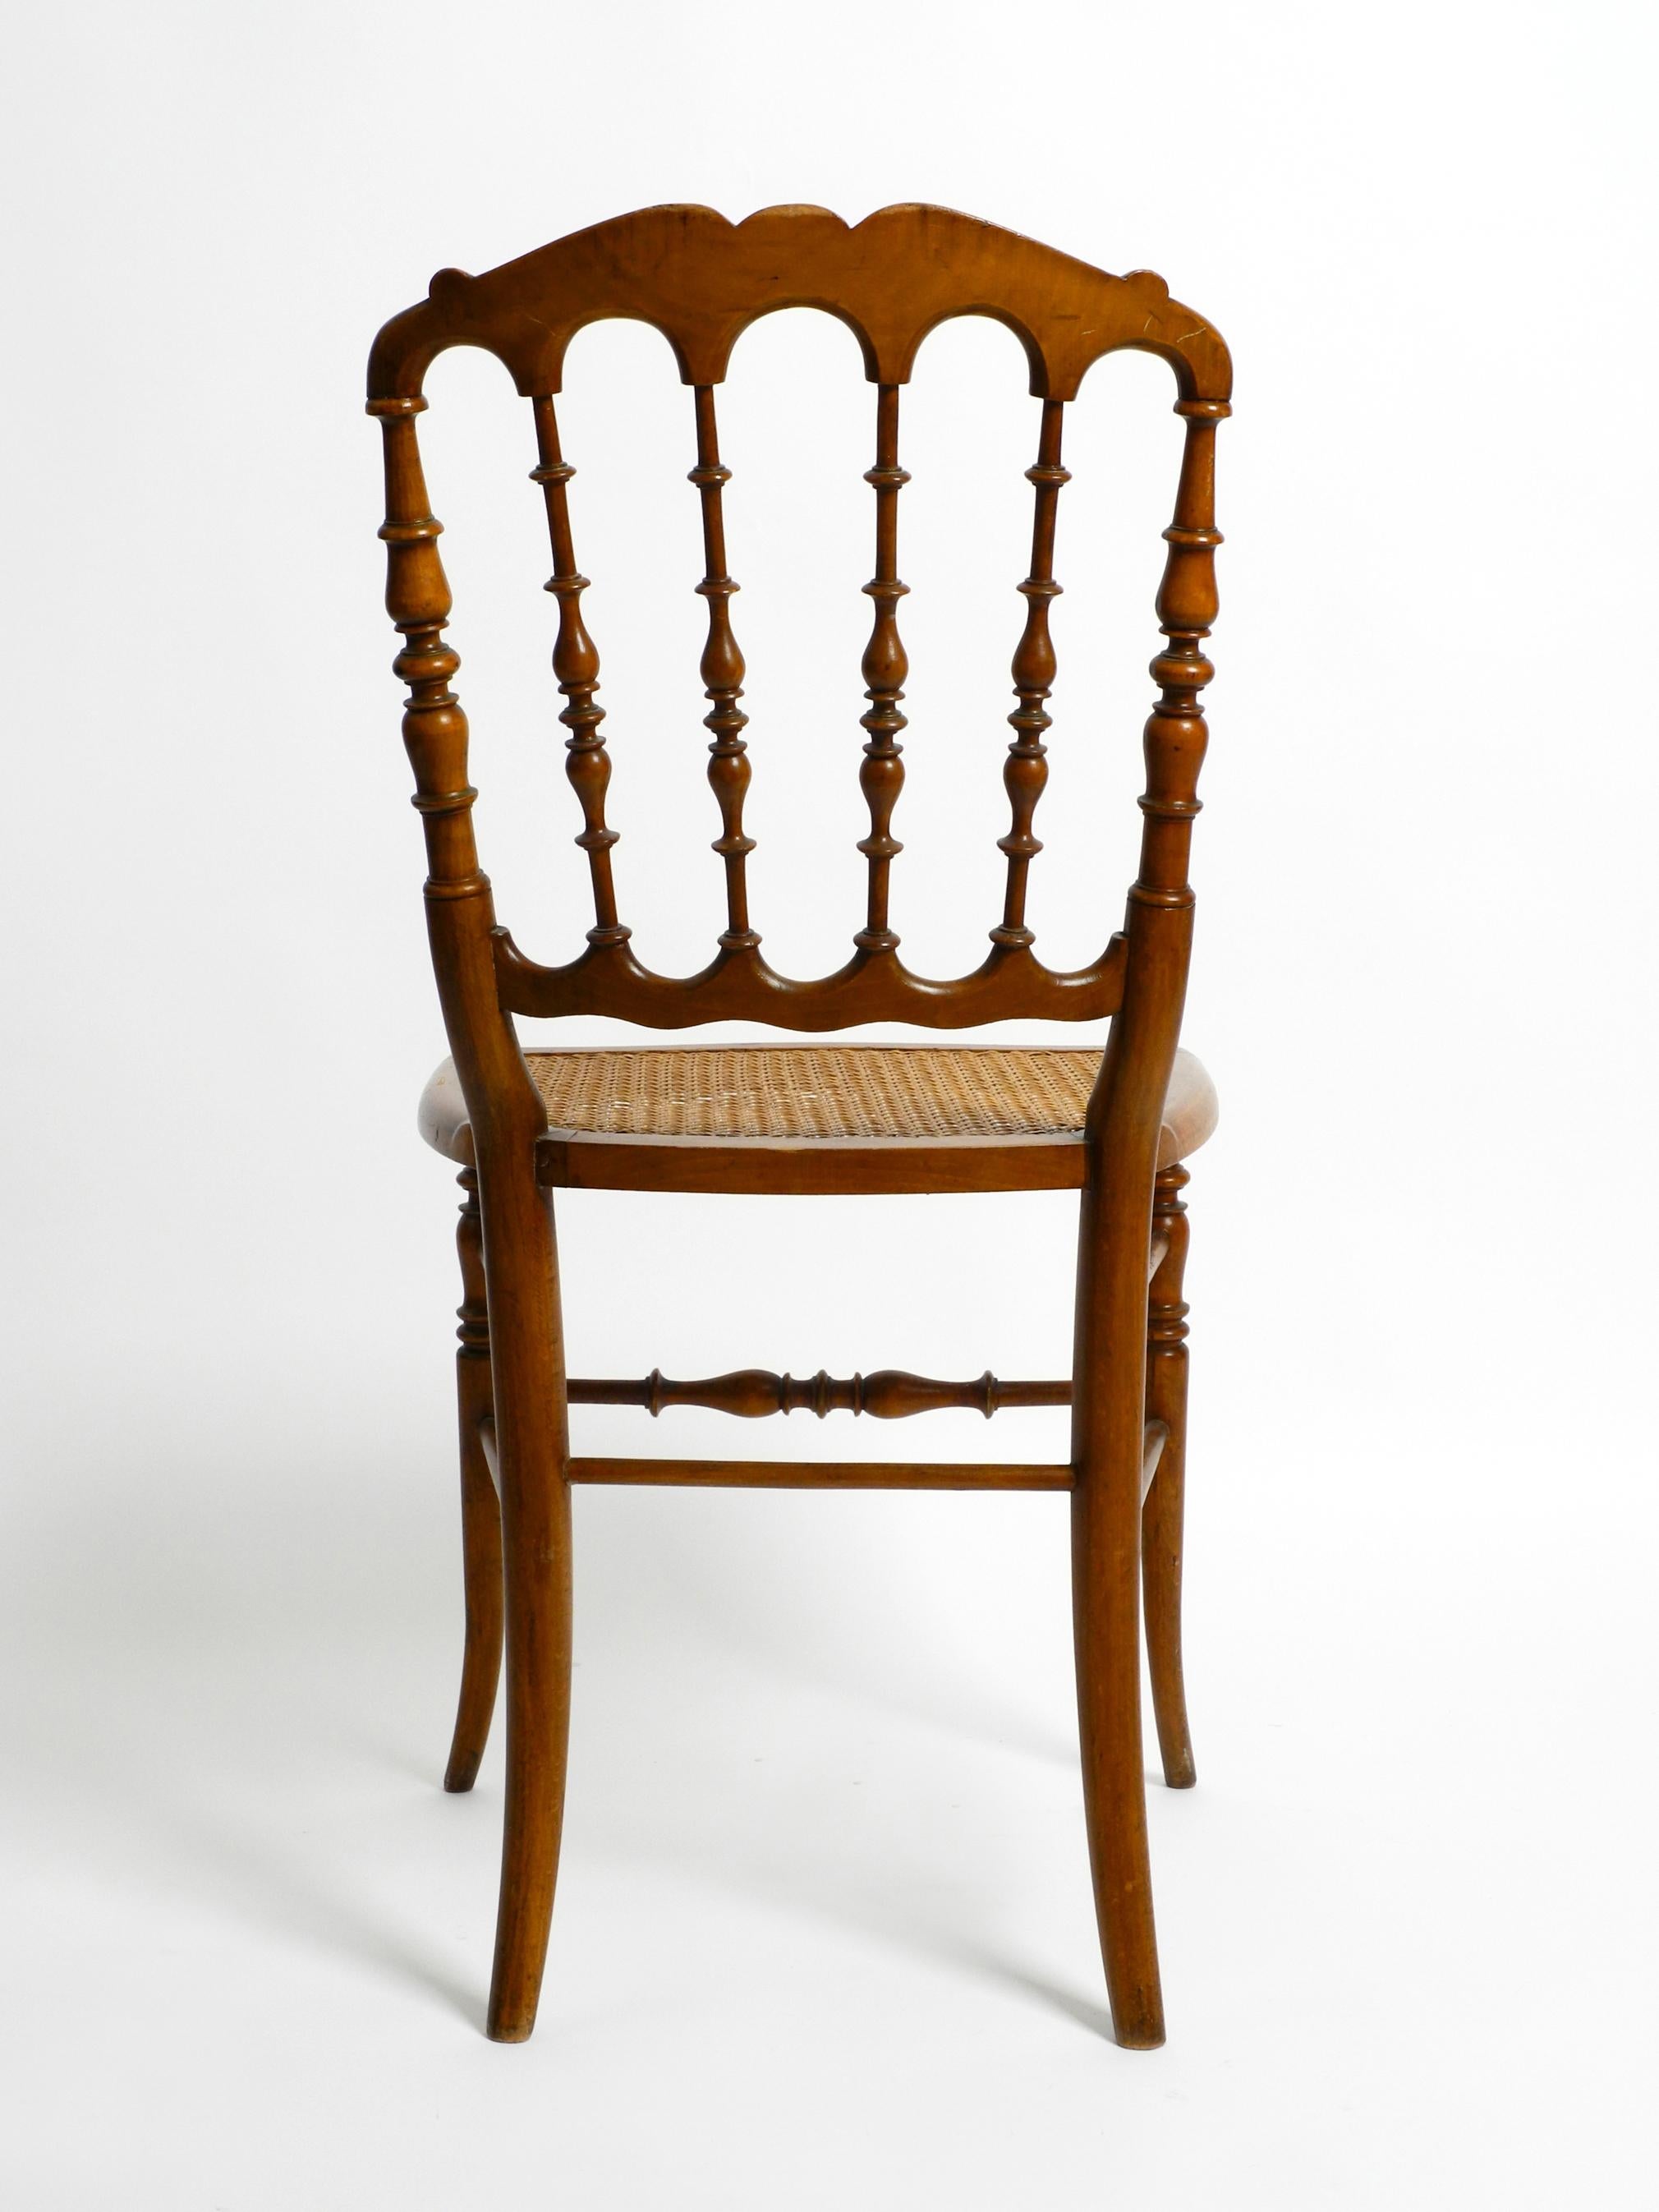 Italian Mid-Century Walnut Chiavari Chair Based on a Design by Giuseppe Gaetano Descalzi